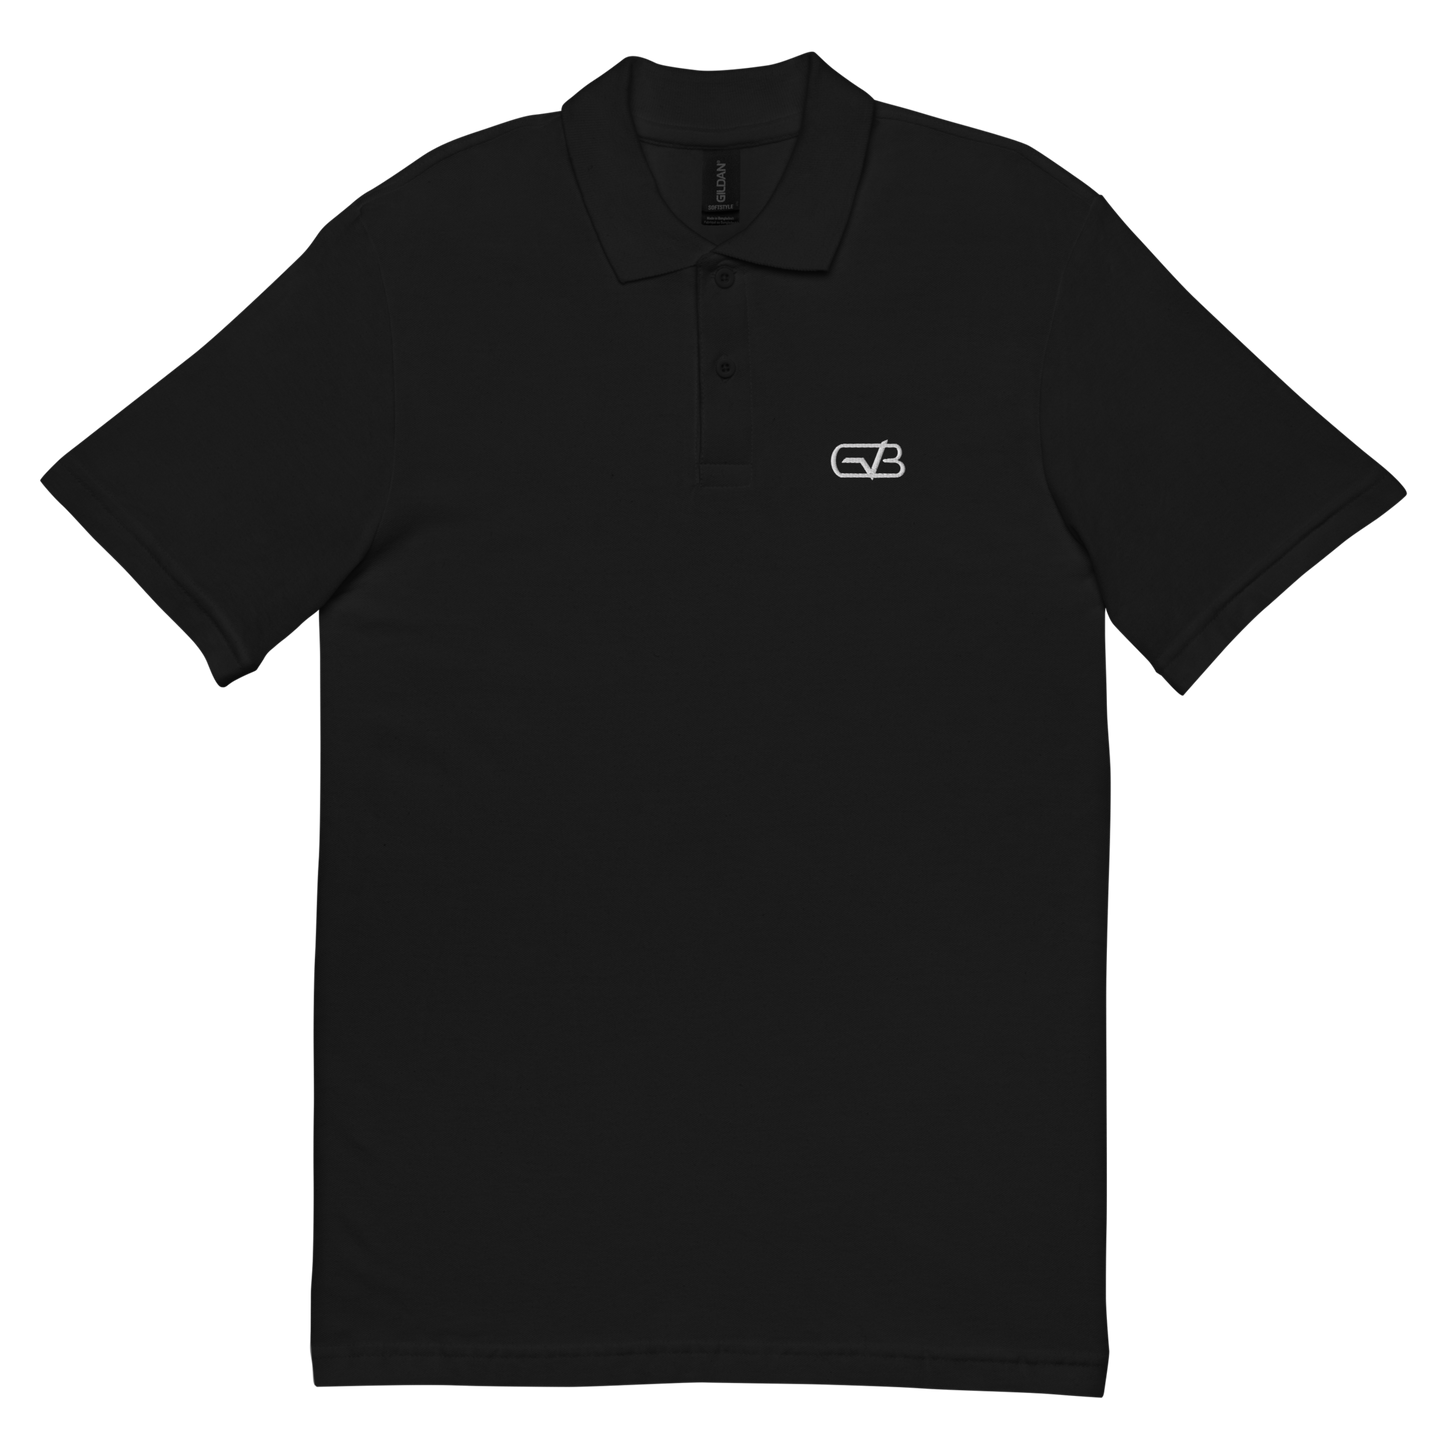 GB Polo Shirt